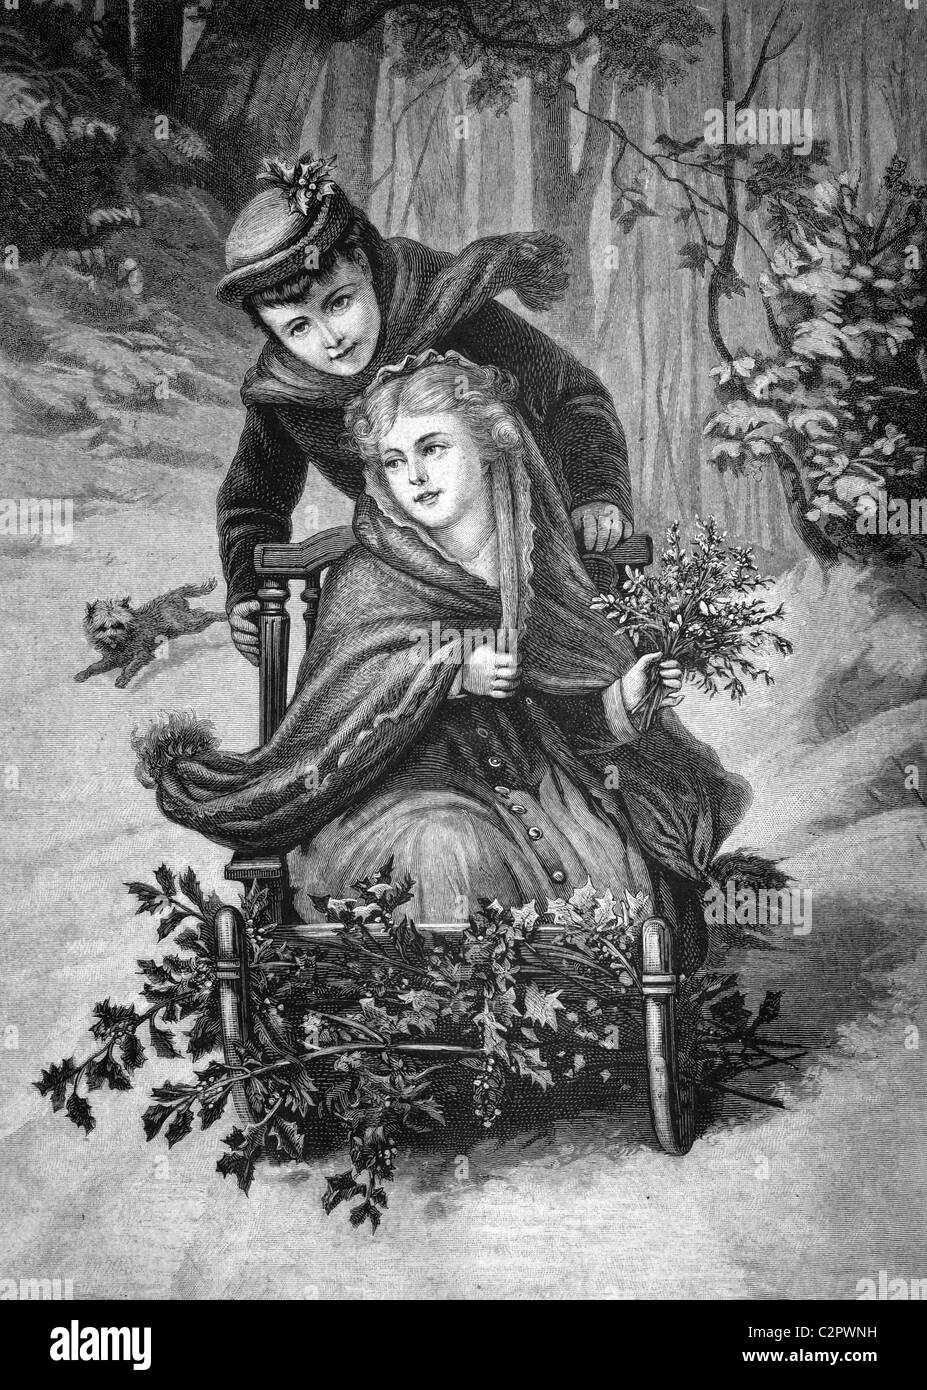 Winter pleasures, historical illustration, about 1886 Stock Photo